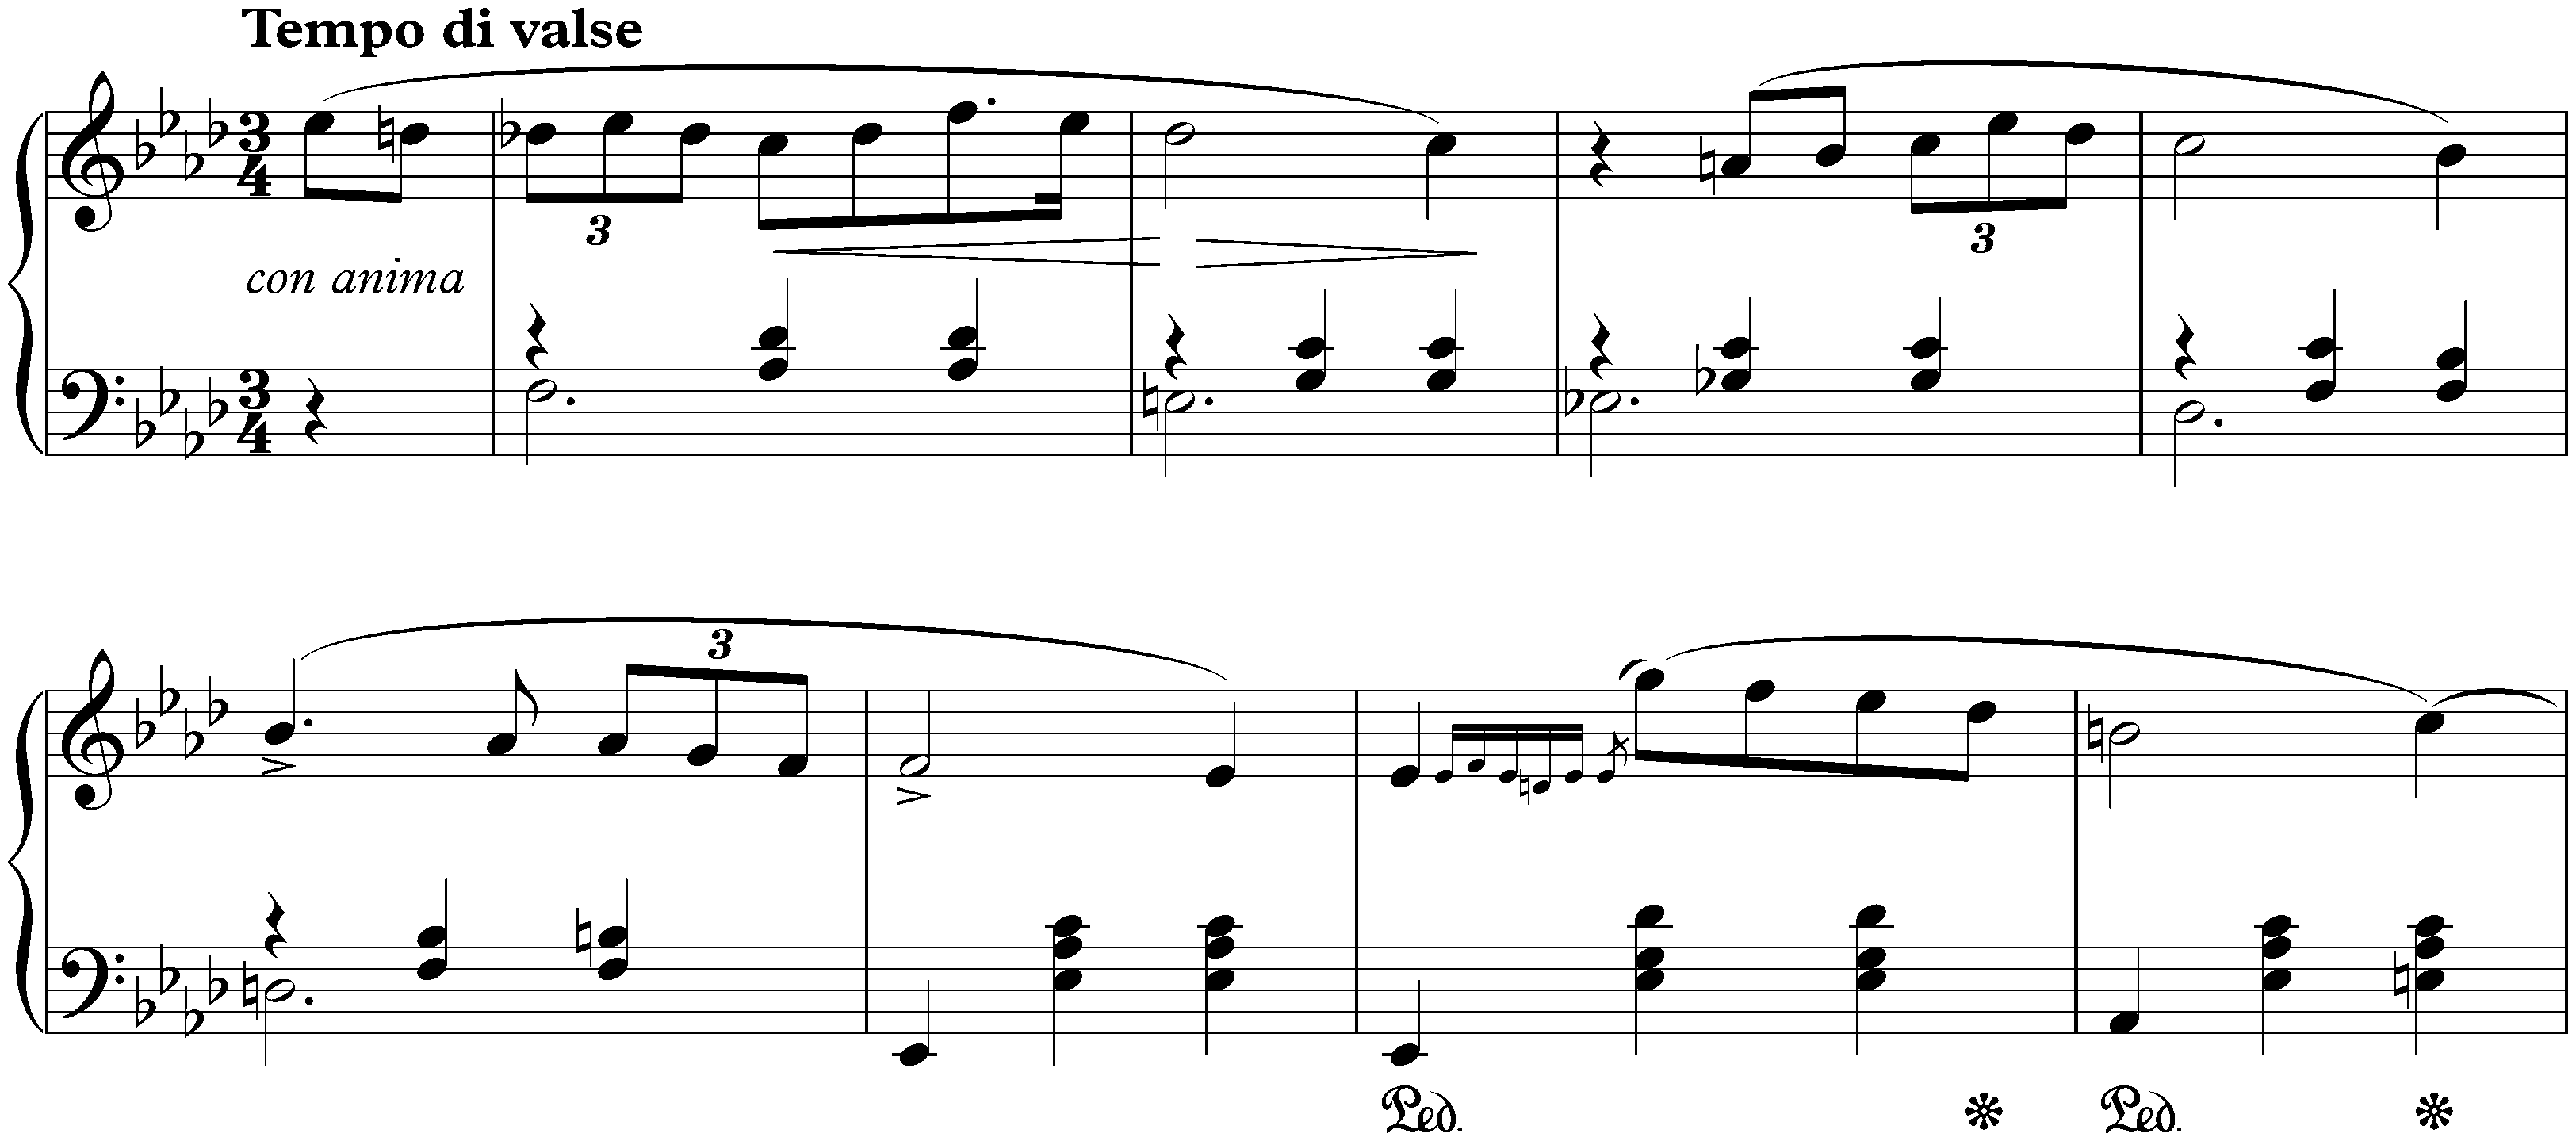 Two Valses, op. 69; 1. A-flat major